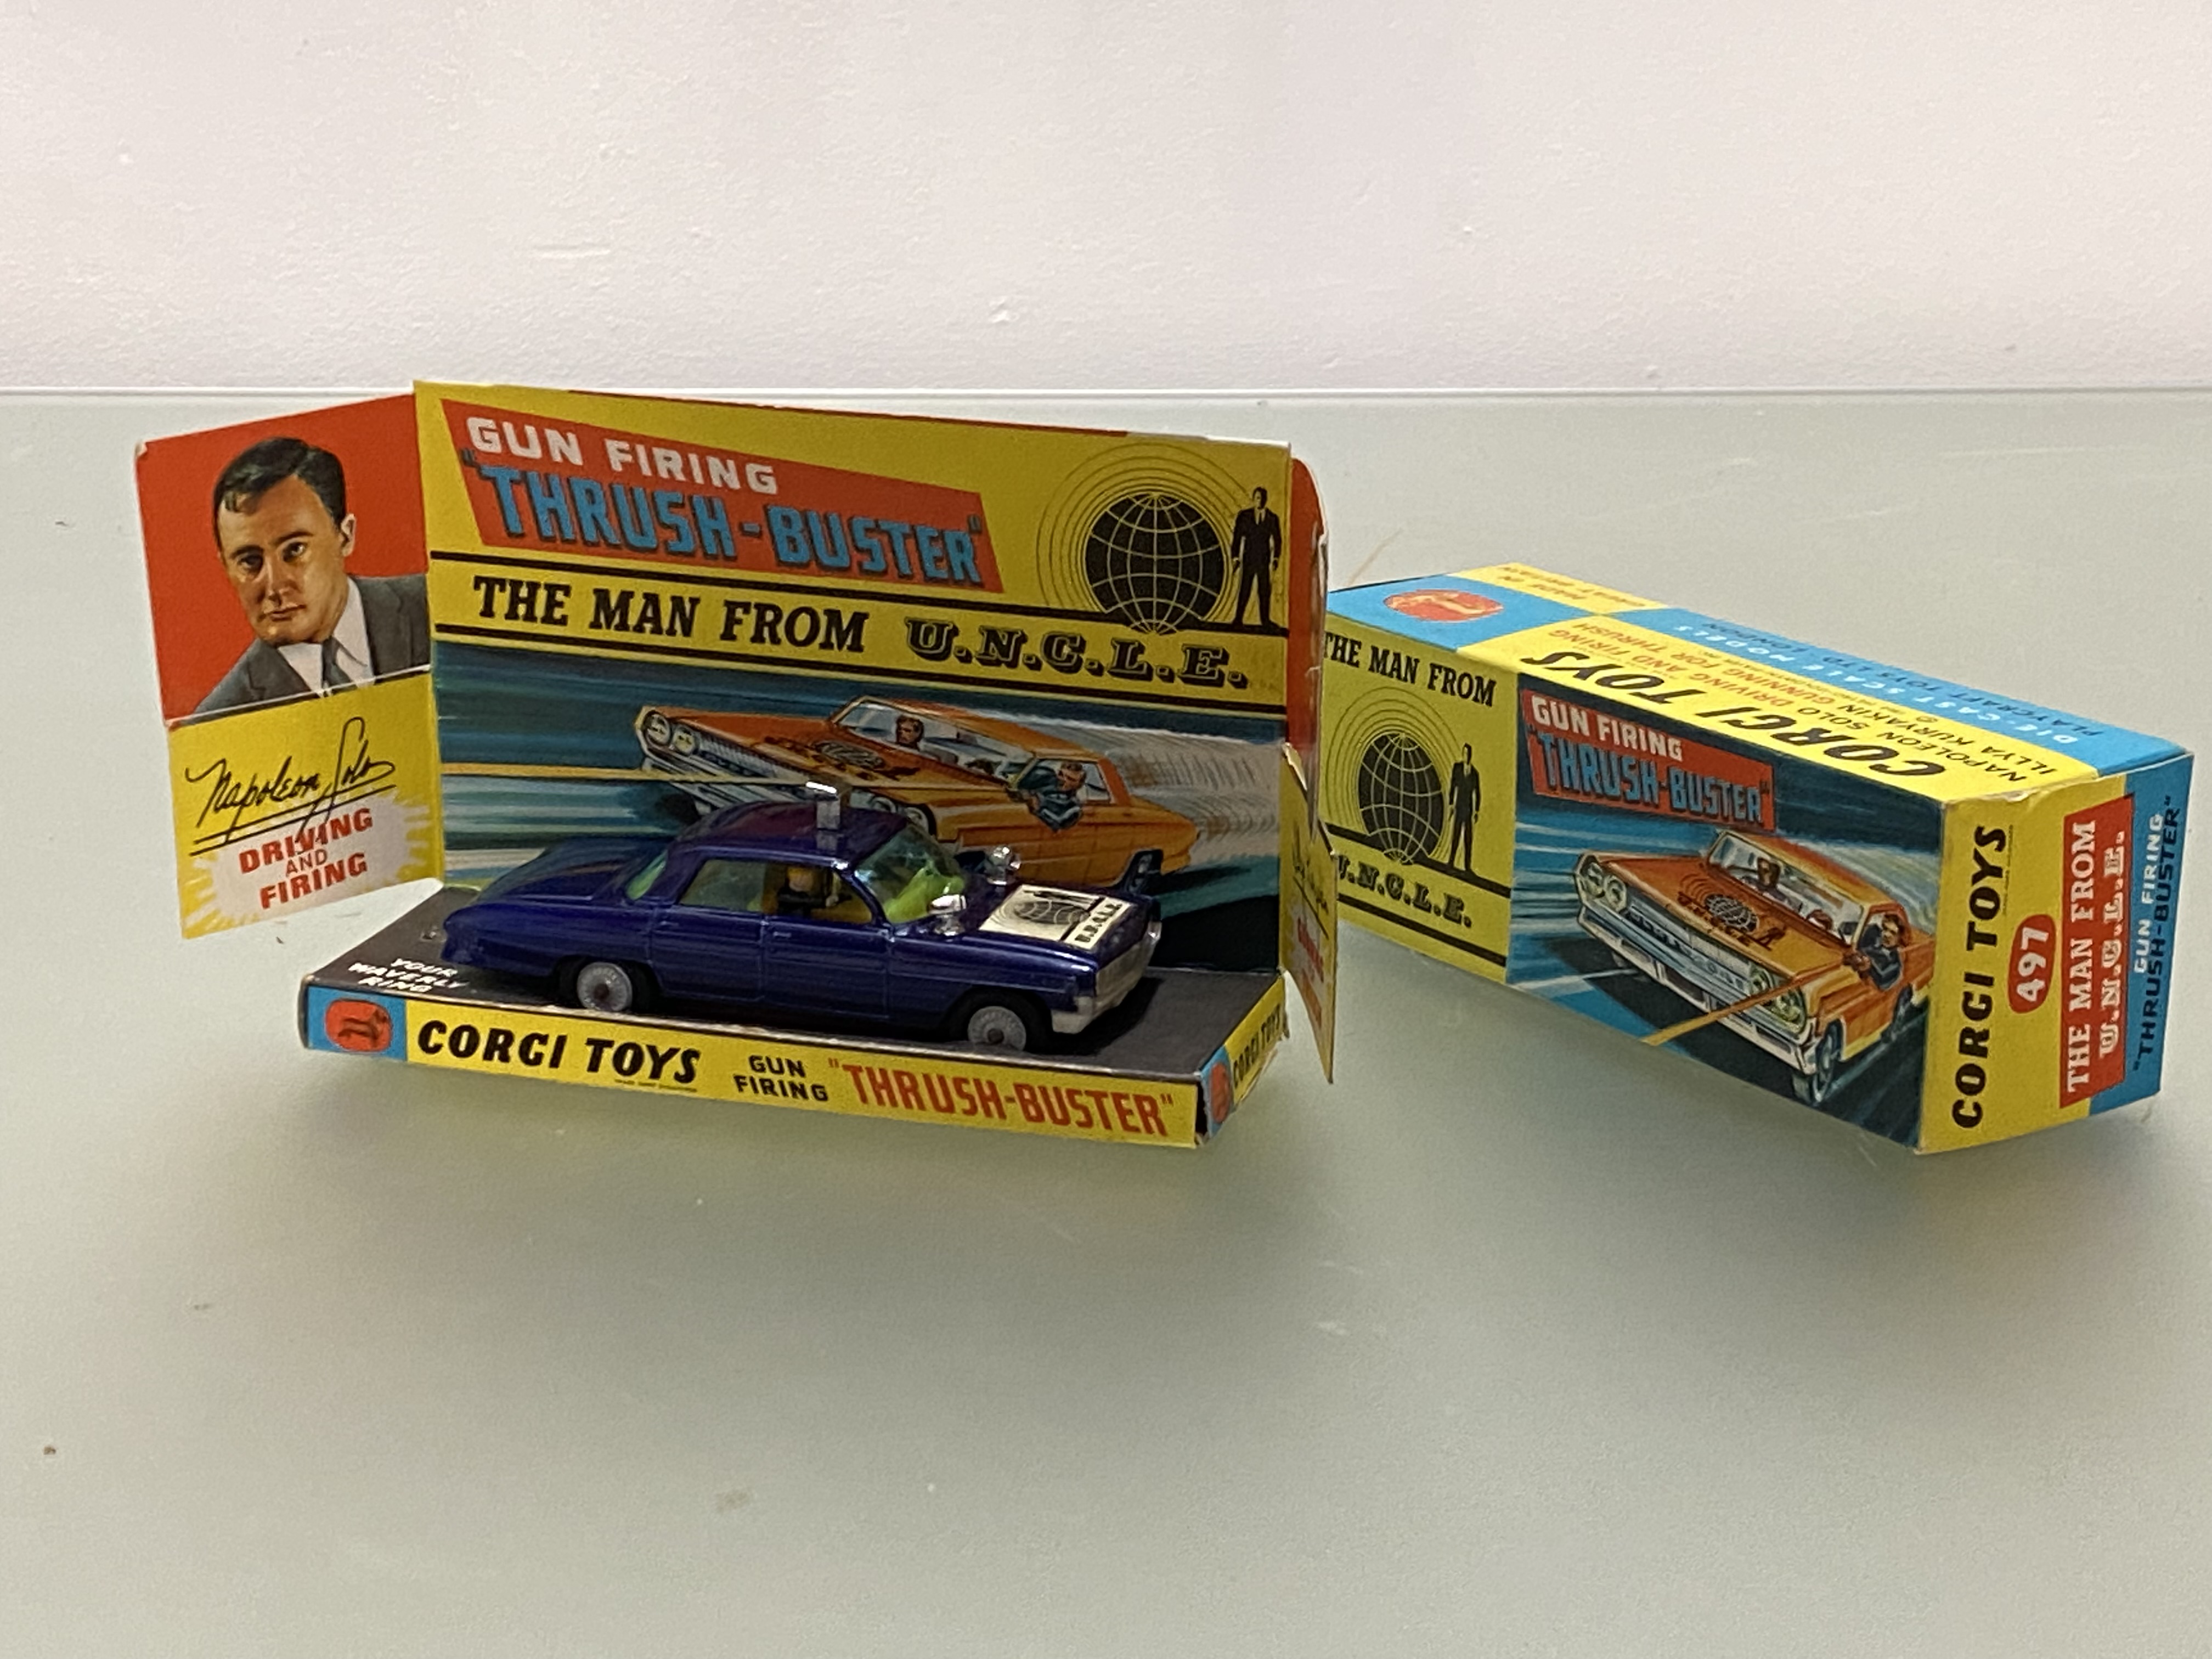 Corgi Toys, a 497 Man From Uncle gun firing thrush buster die cast model car, in original box ( - Image 3 of 3